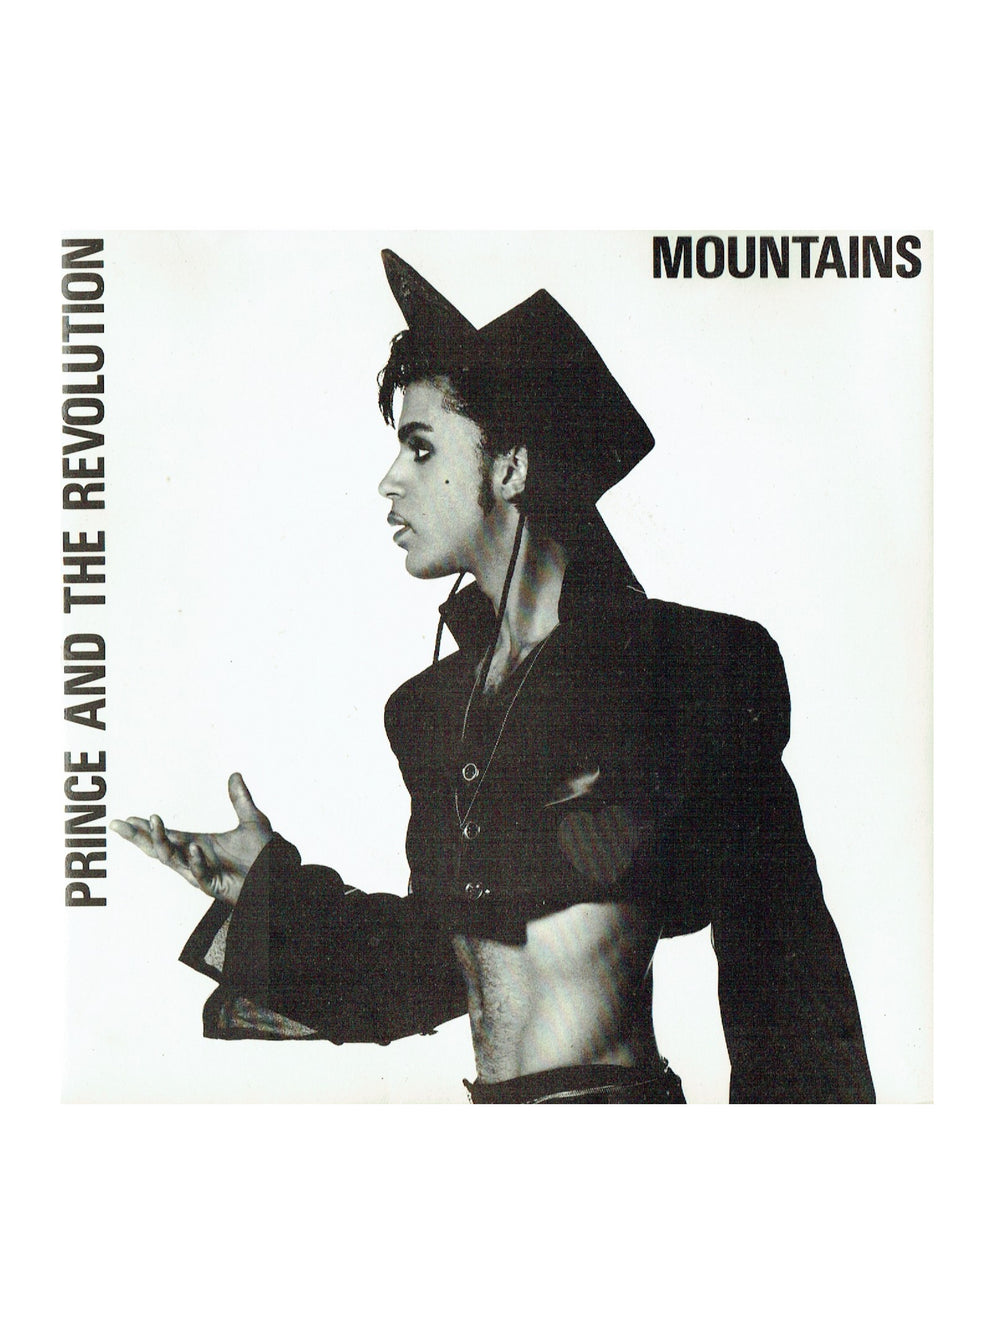 Prince – Mountains / Alexa De Paris 7 Inch Single PS Release 1986 UK BLACK TEXT CARD SL